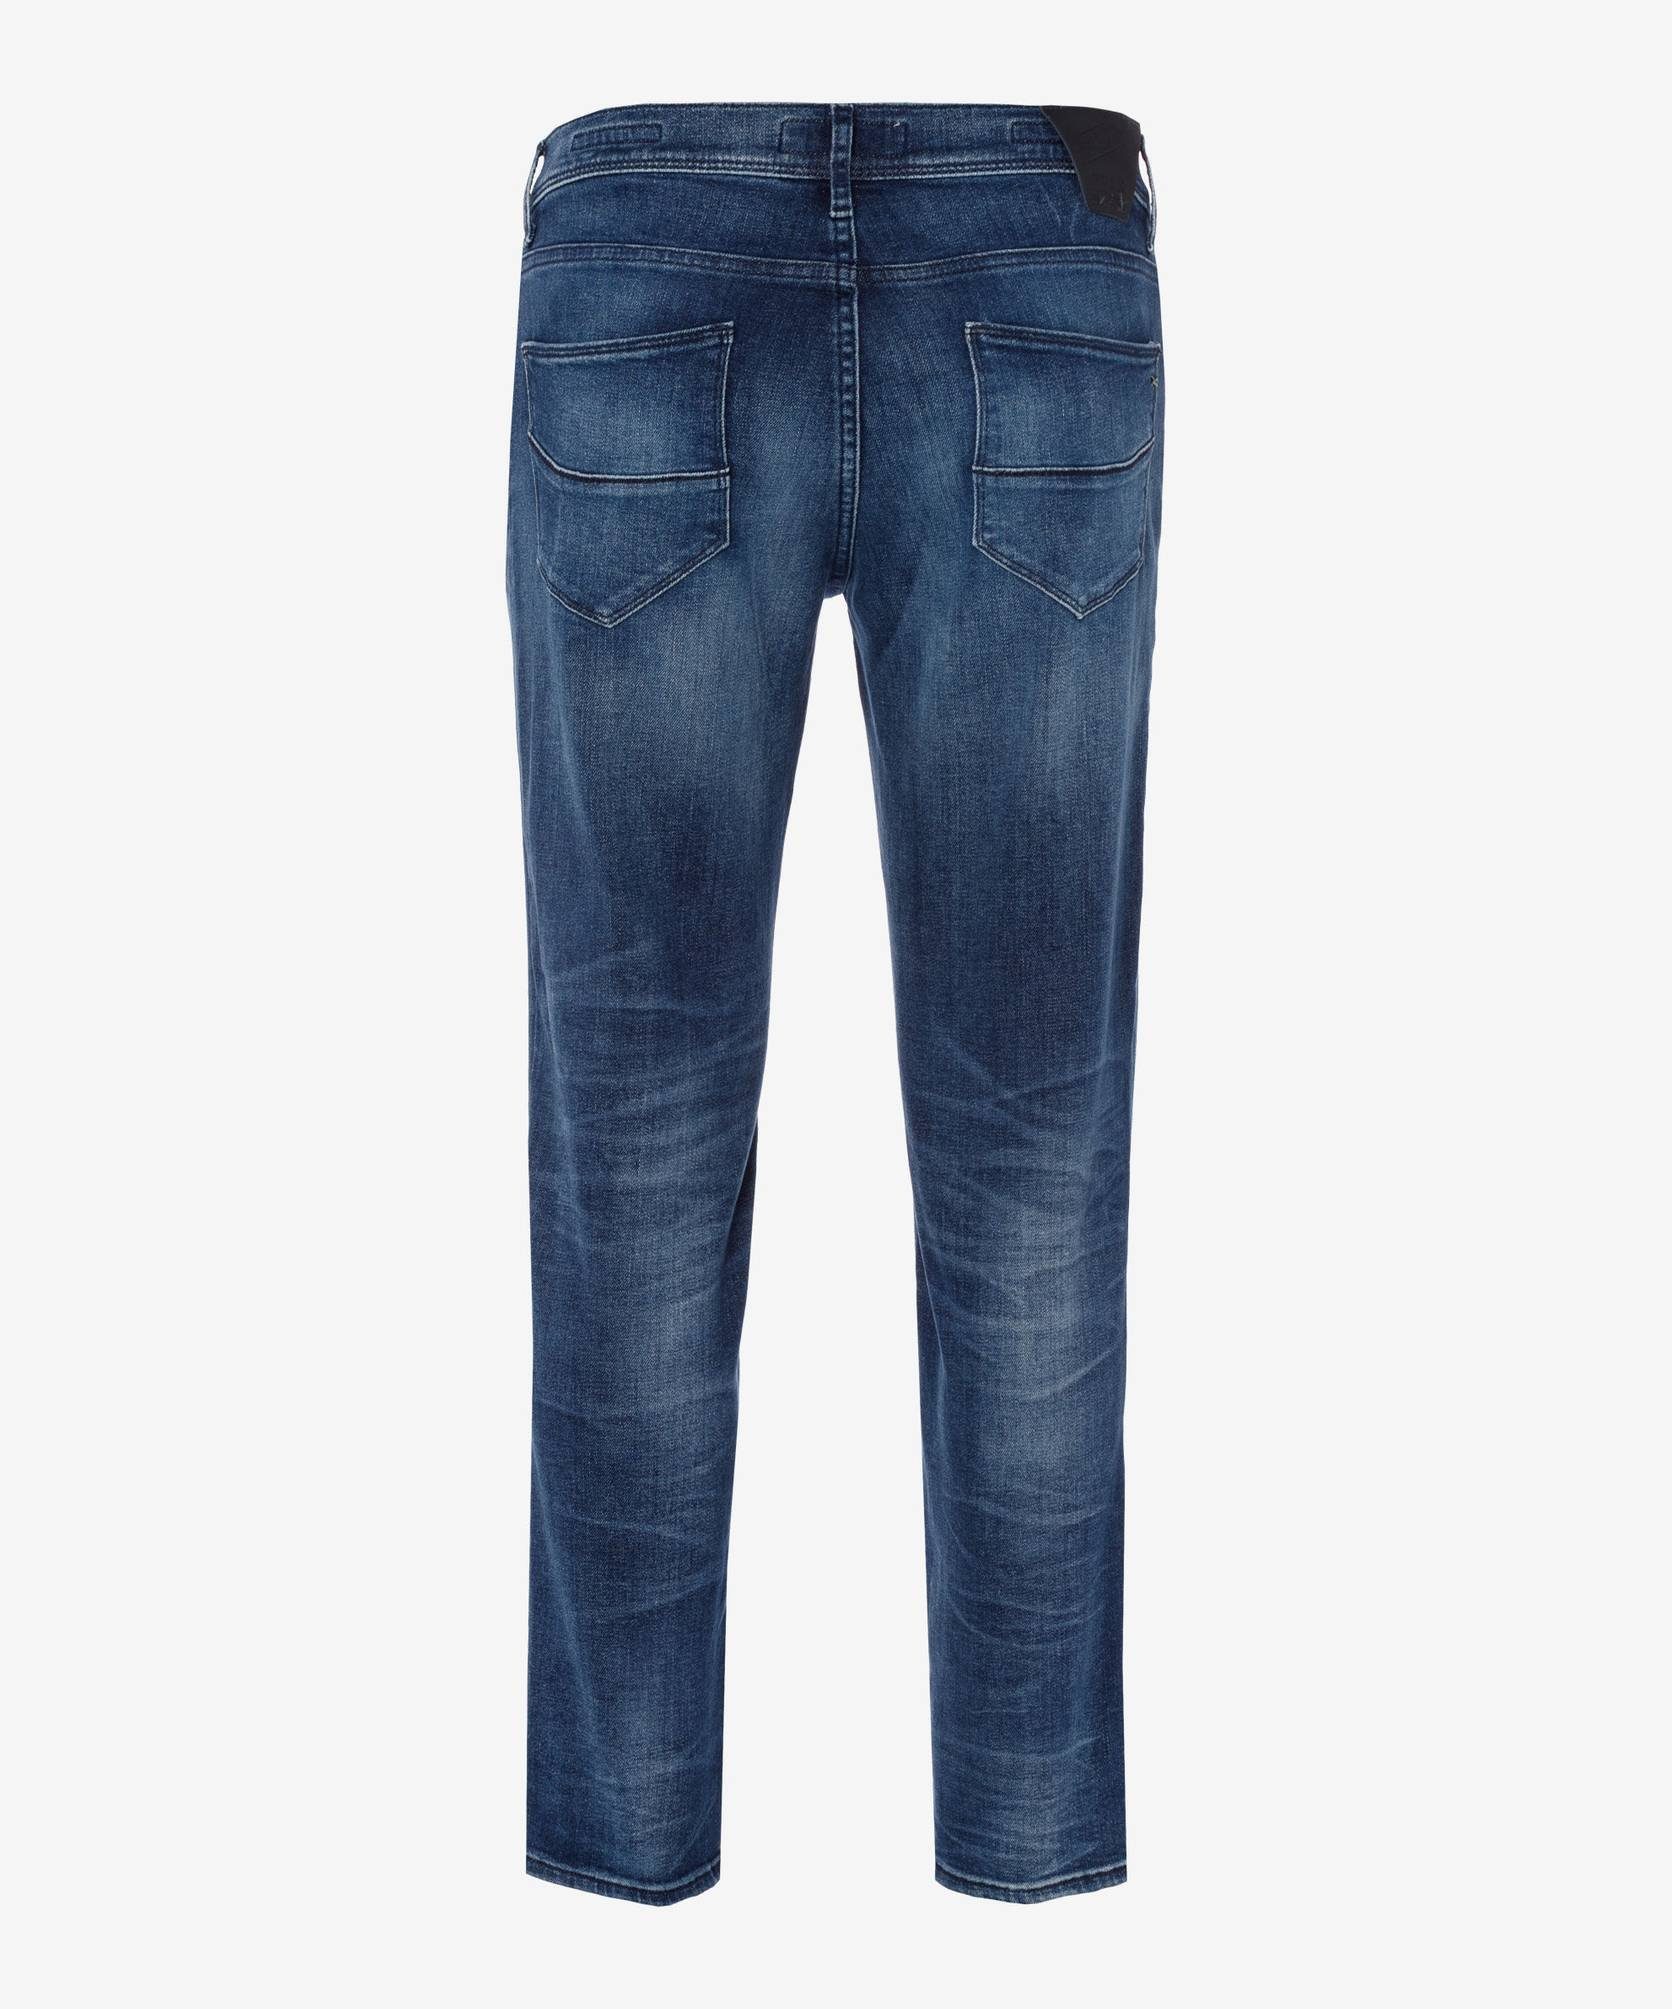 5-Pocket-Jeans Style 84-6627 Chris (26) blue Brax used